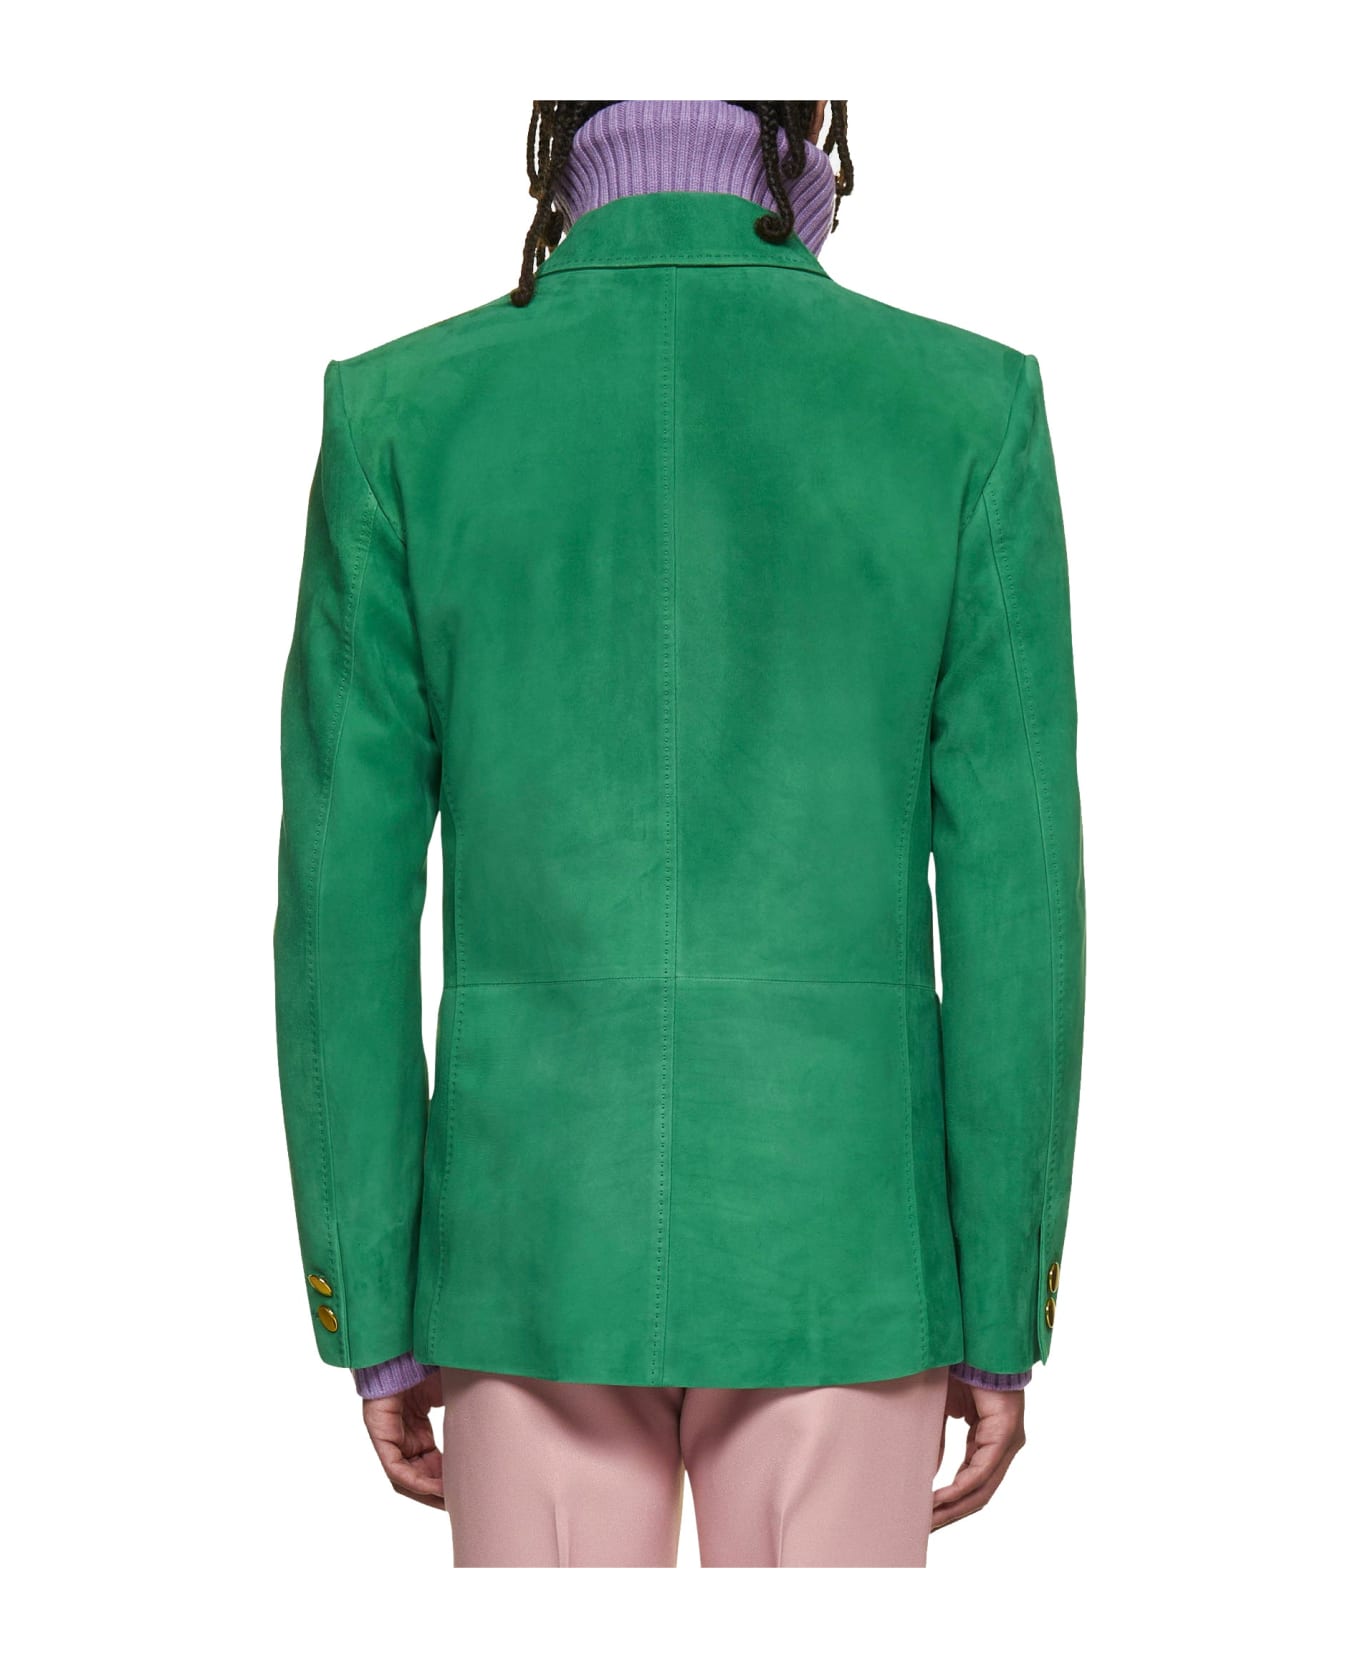 Gucci Suede Jacket - Green